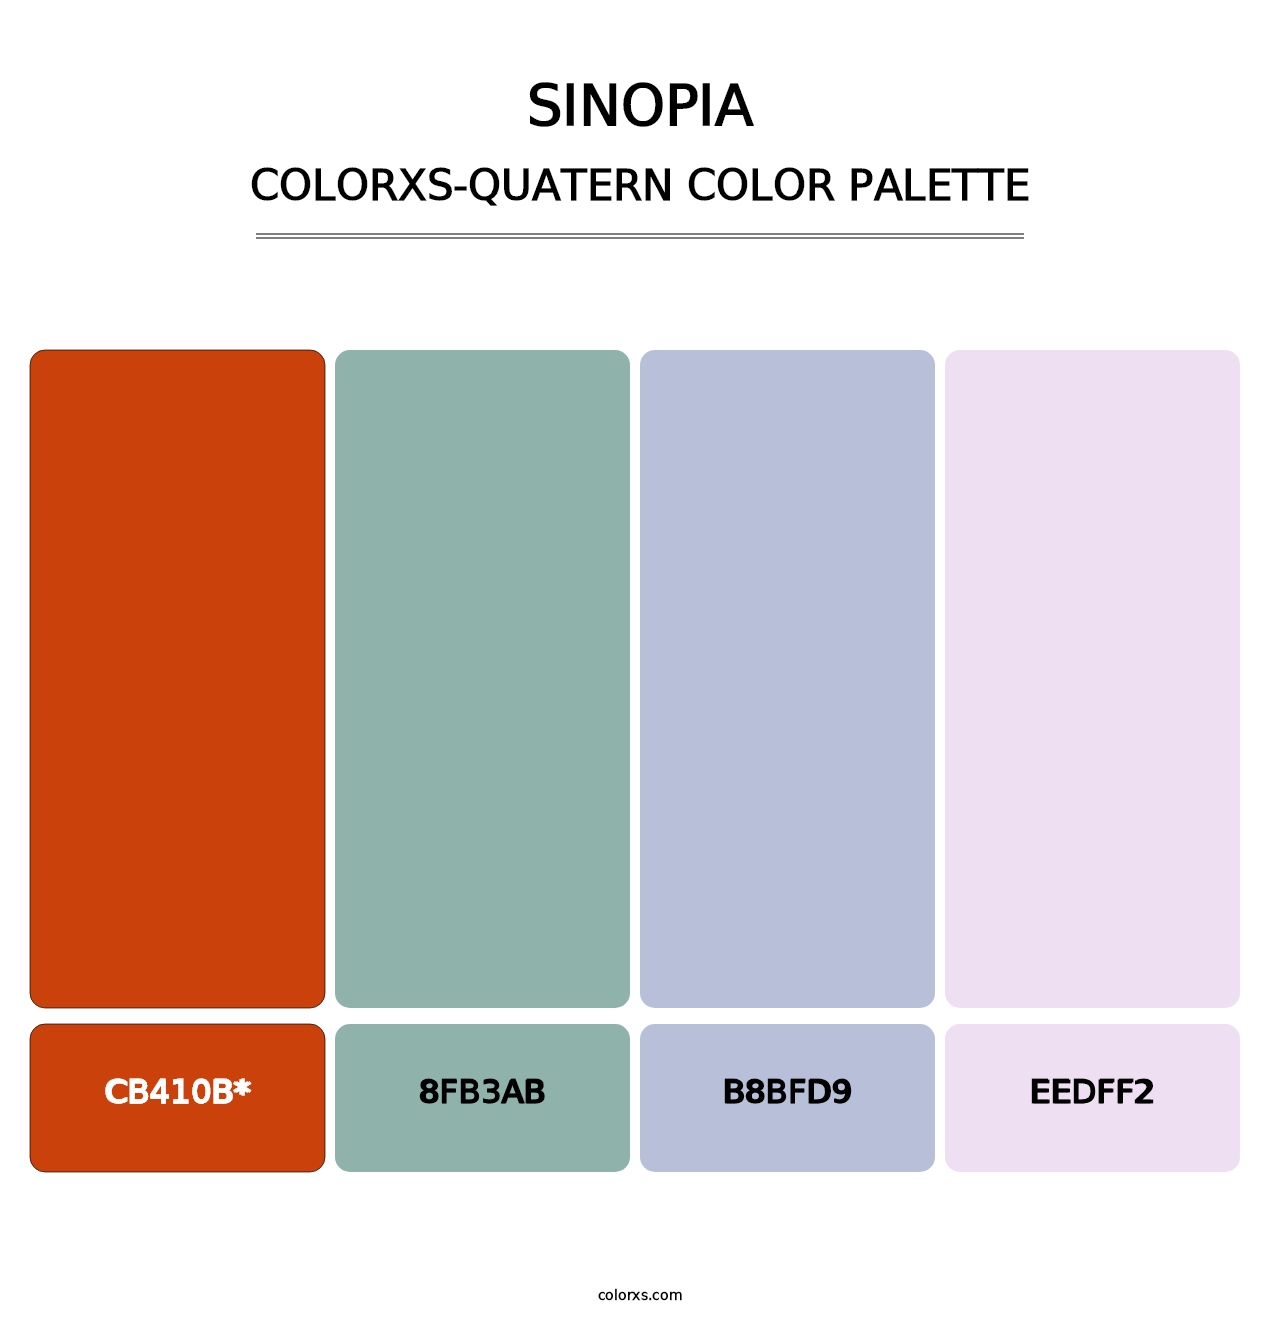 Sinopia - Colorxs Quatern Palette